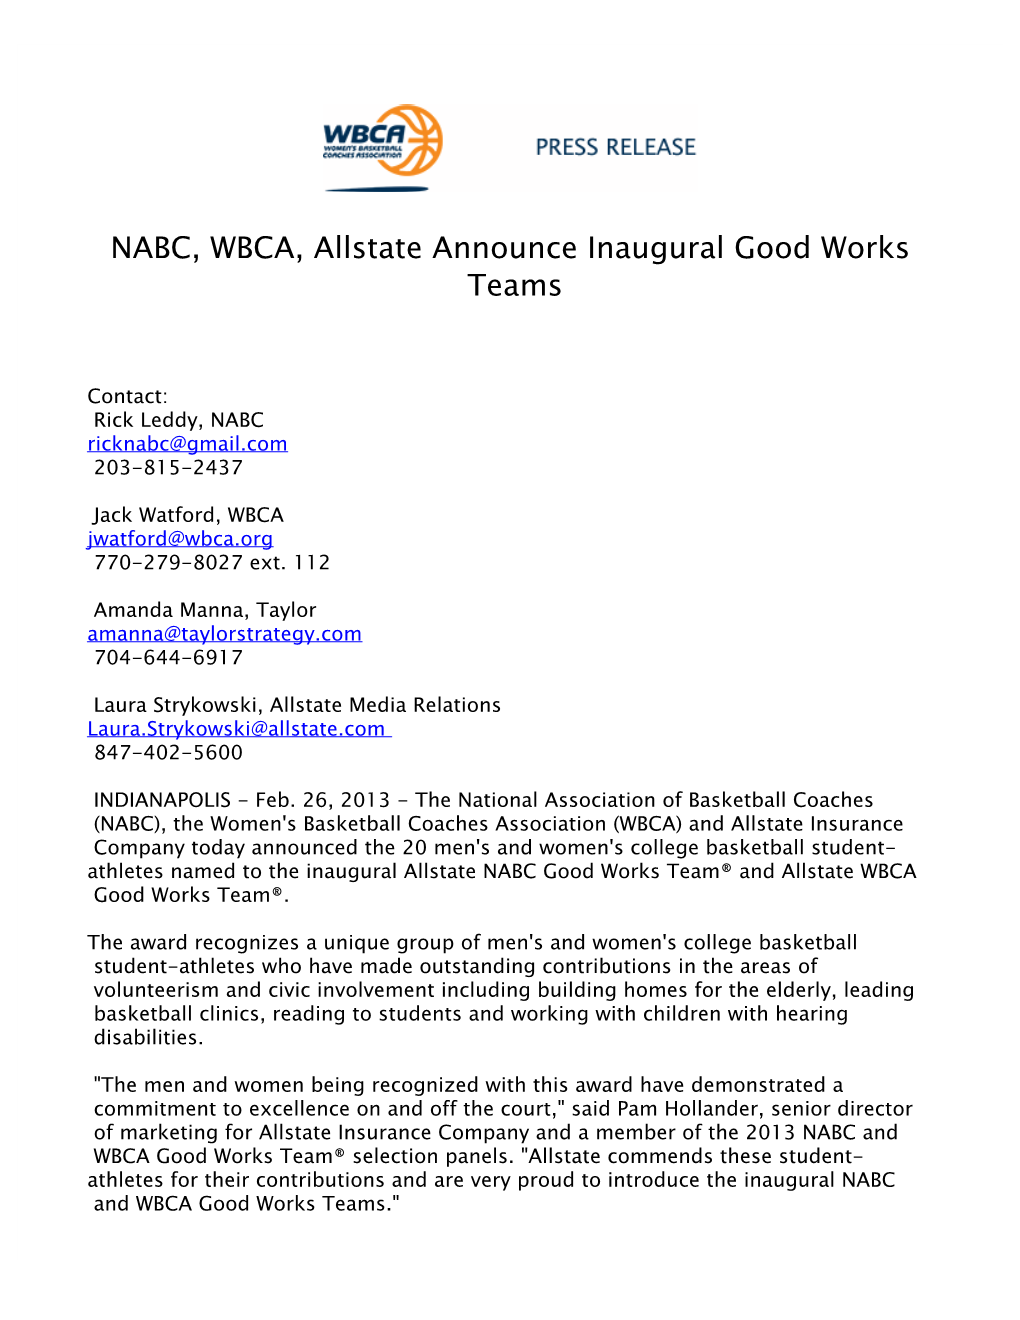 NABC, WBCA, Allstate Announce Inaugural Good Works Teams 2012